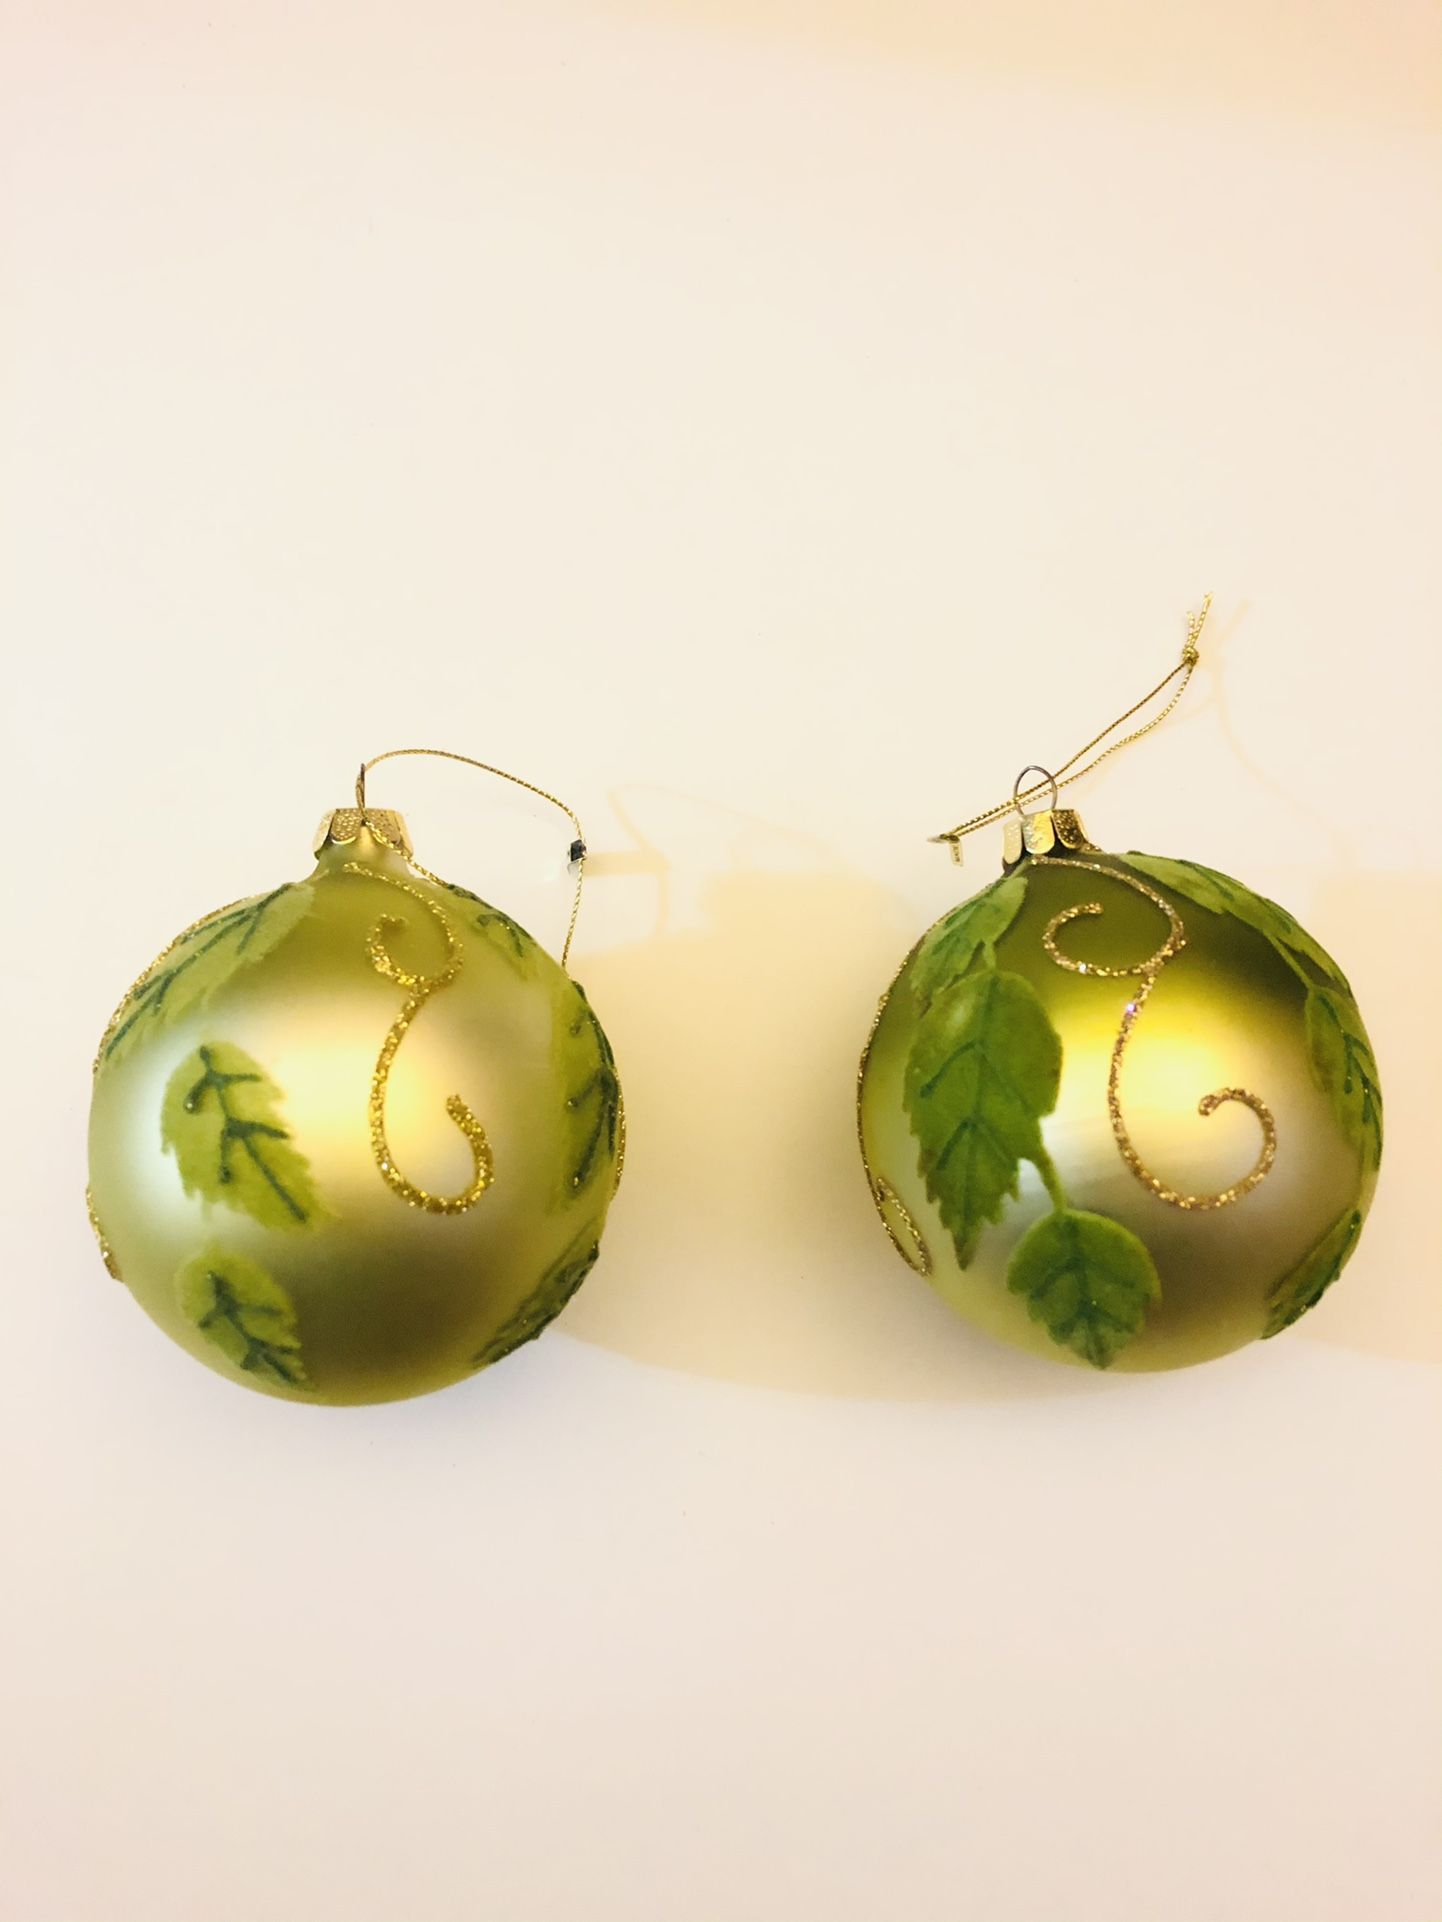 Green Textured Ornaments